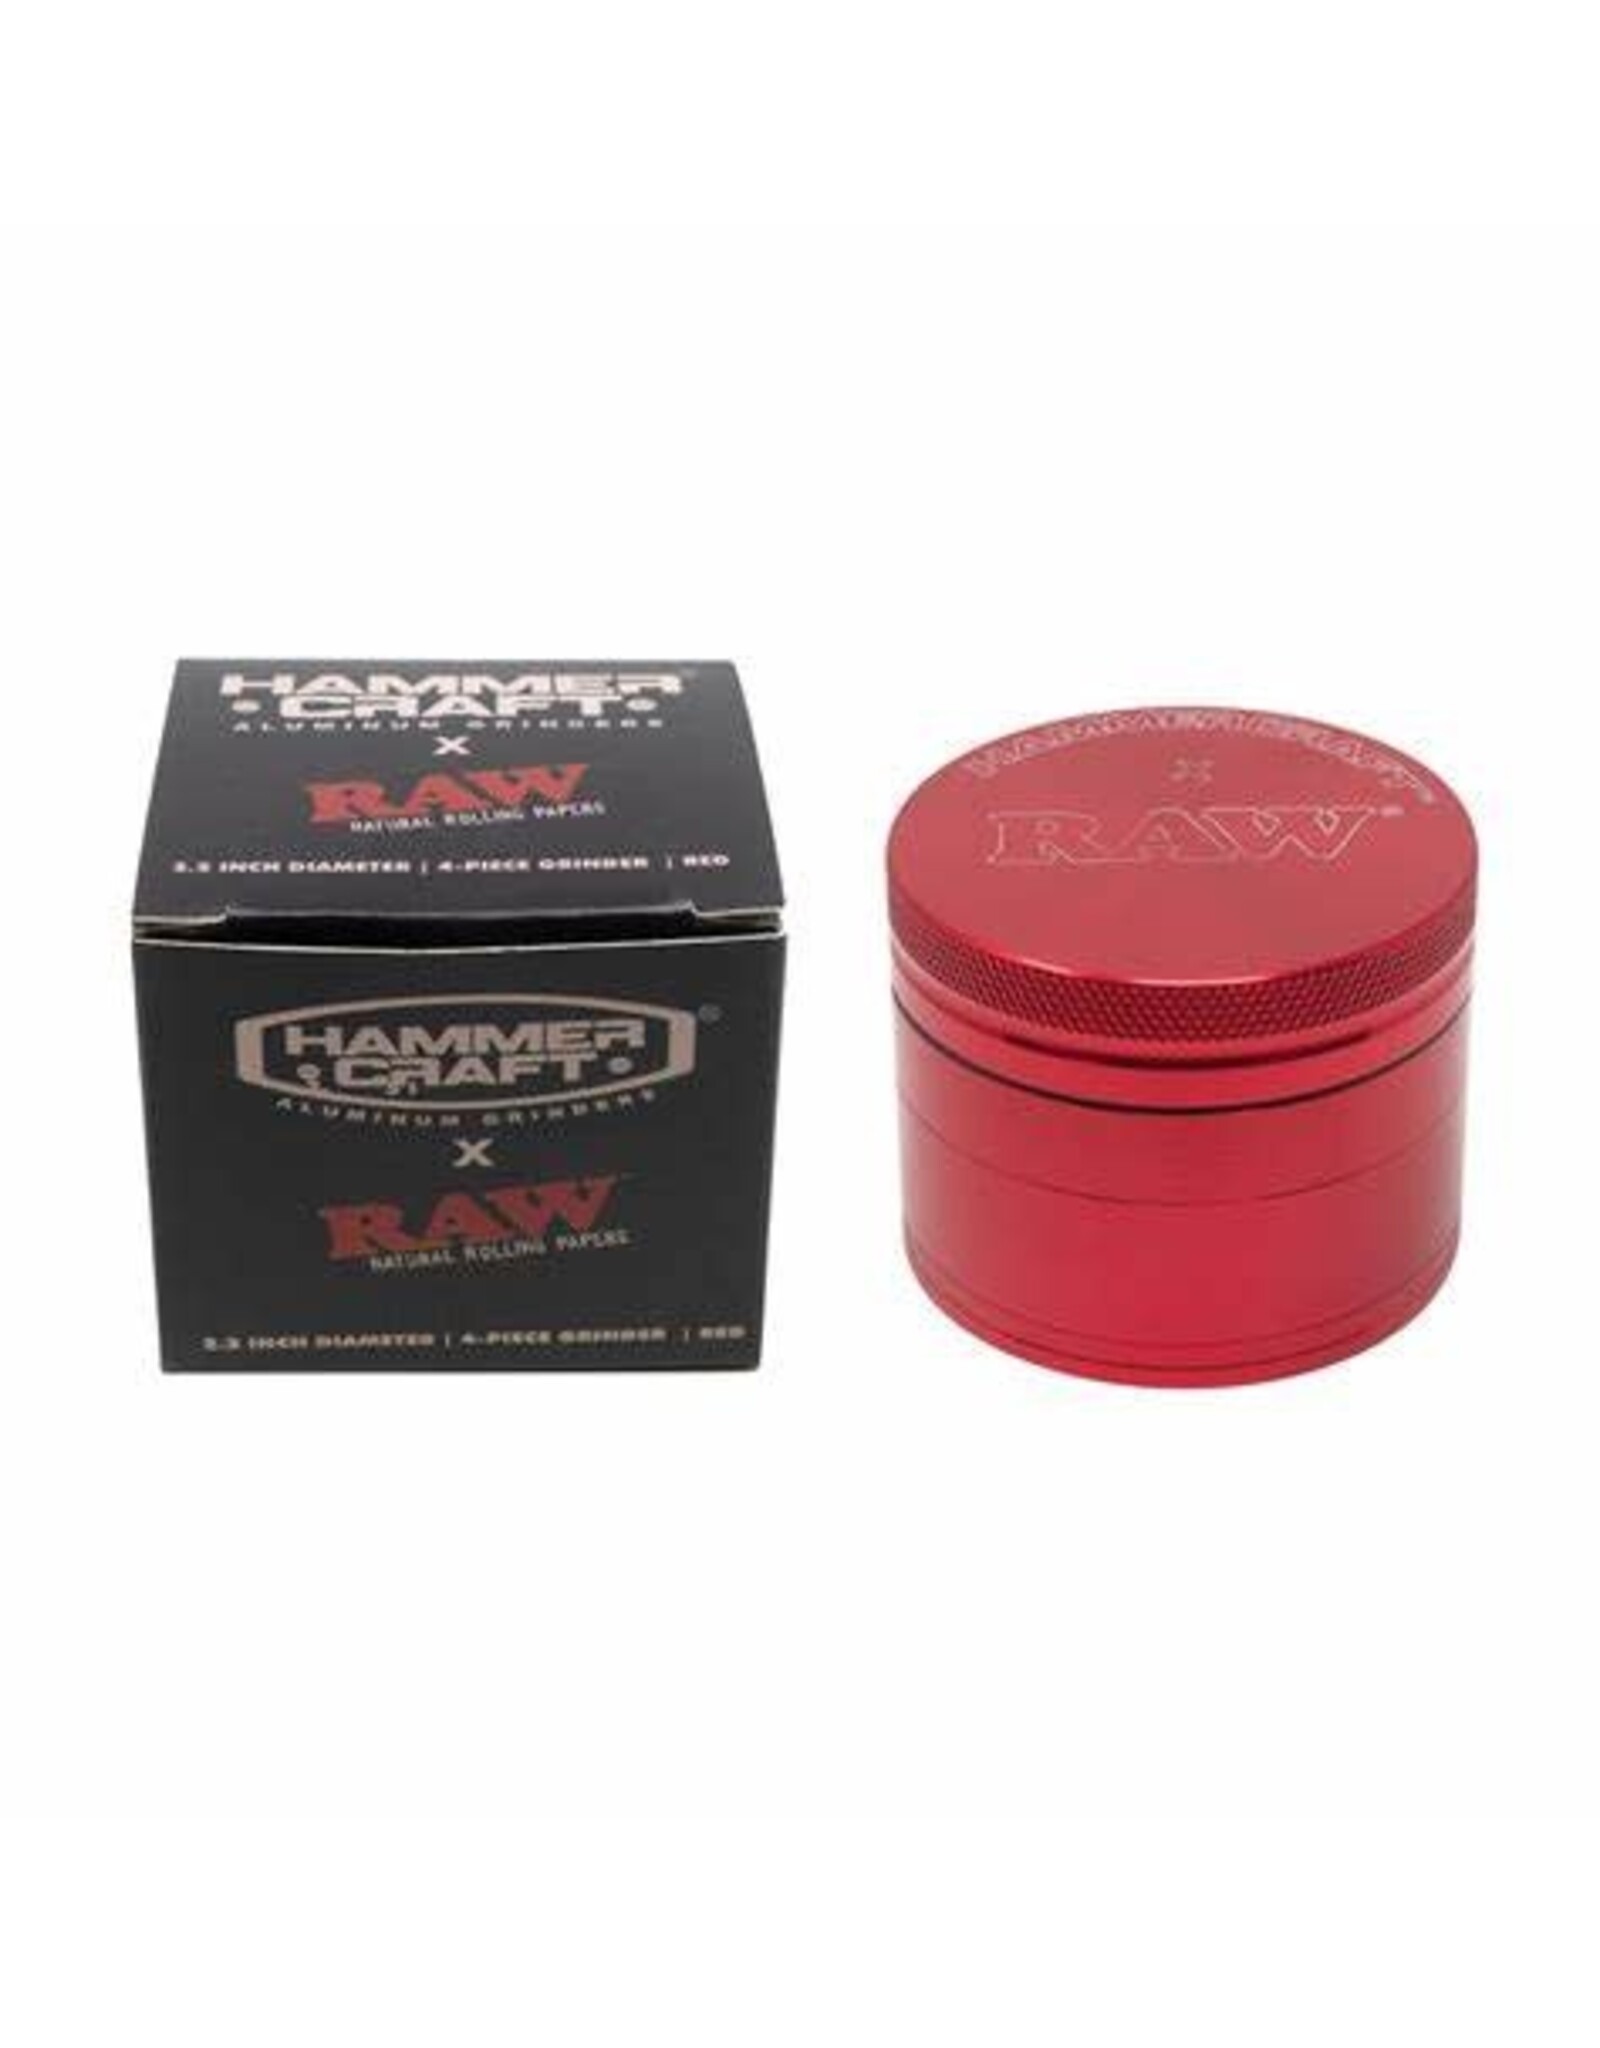 Raw Hammercraft X Raw Grinder 2.2" 4pc Red